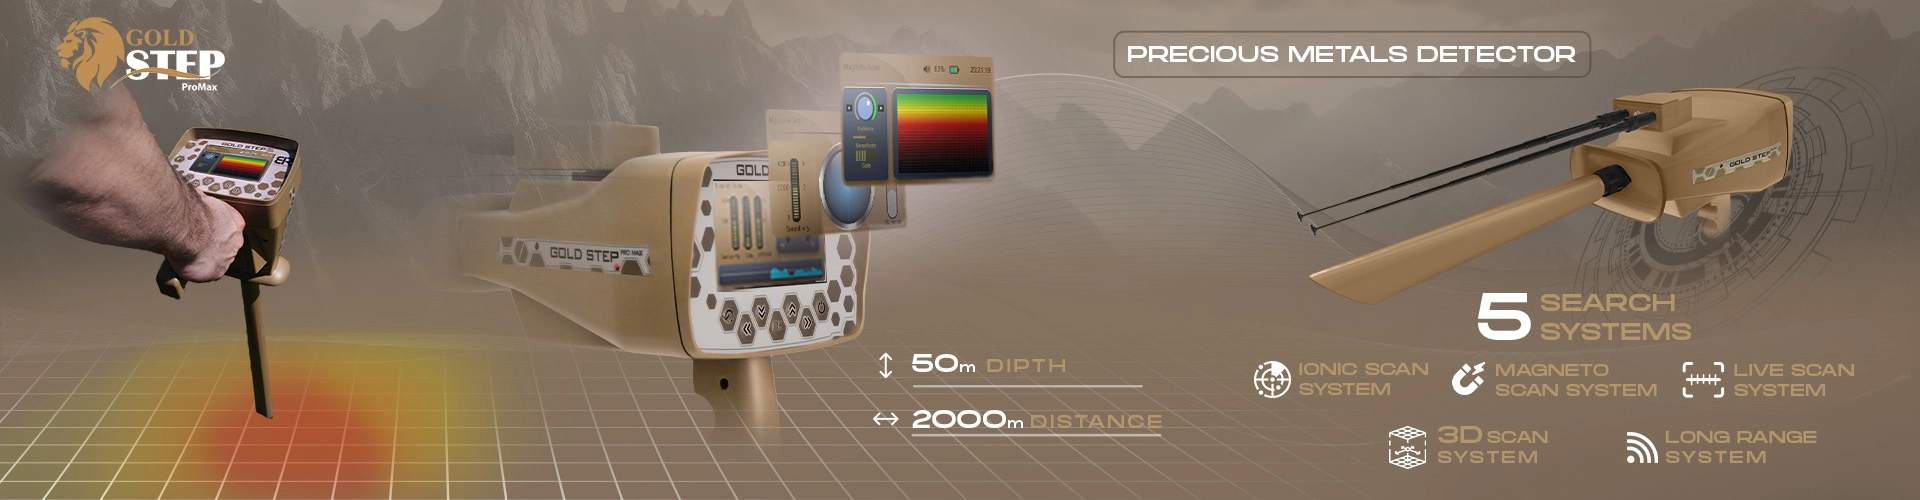 BR Gold Step Pro Max - Metall- und Golddetektor